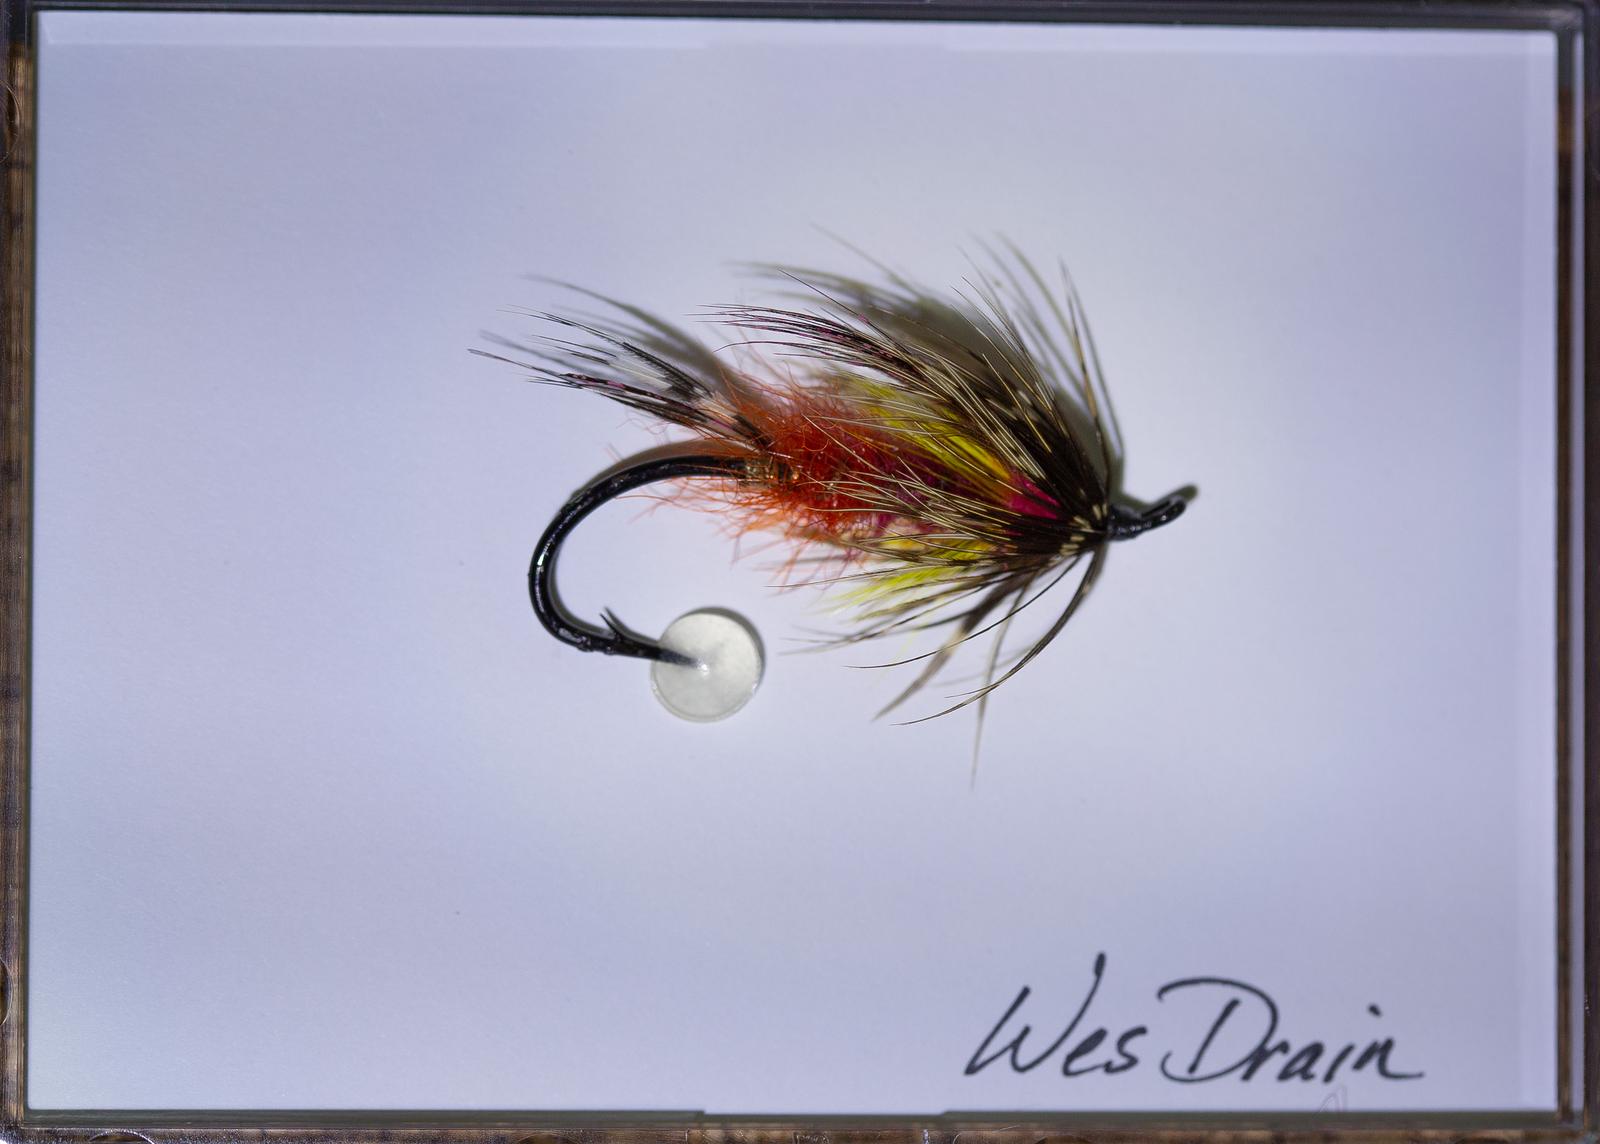 Wes Drain Pacific Northwest Steelhead Fly